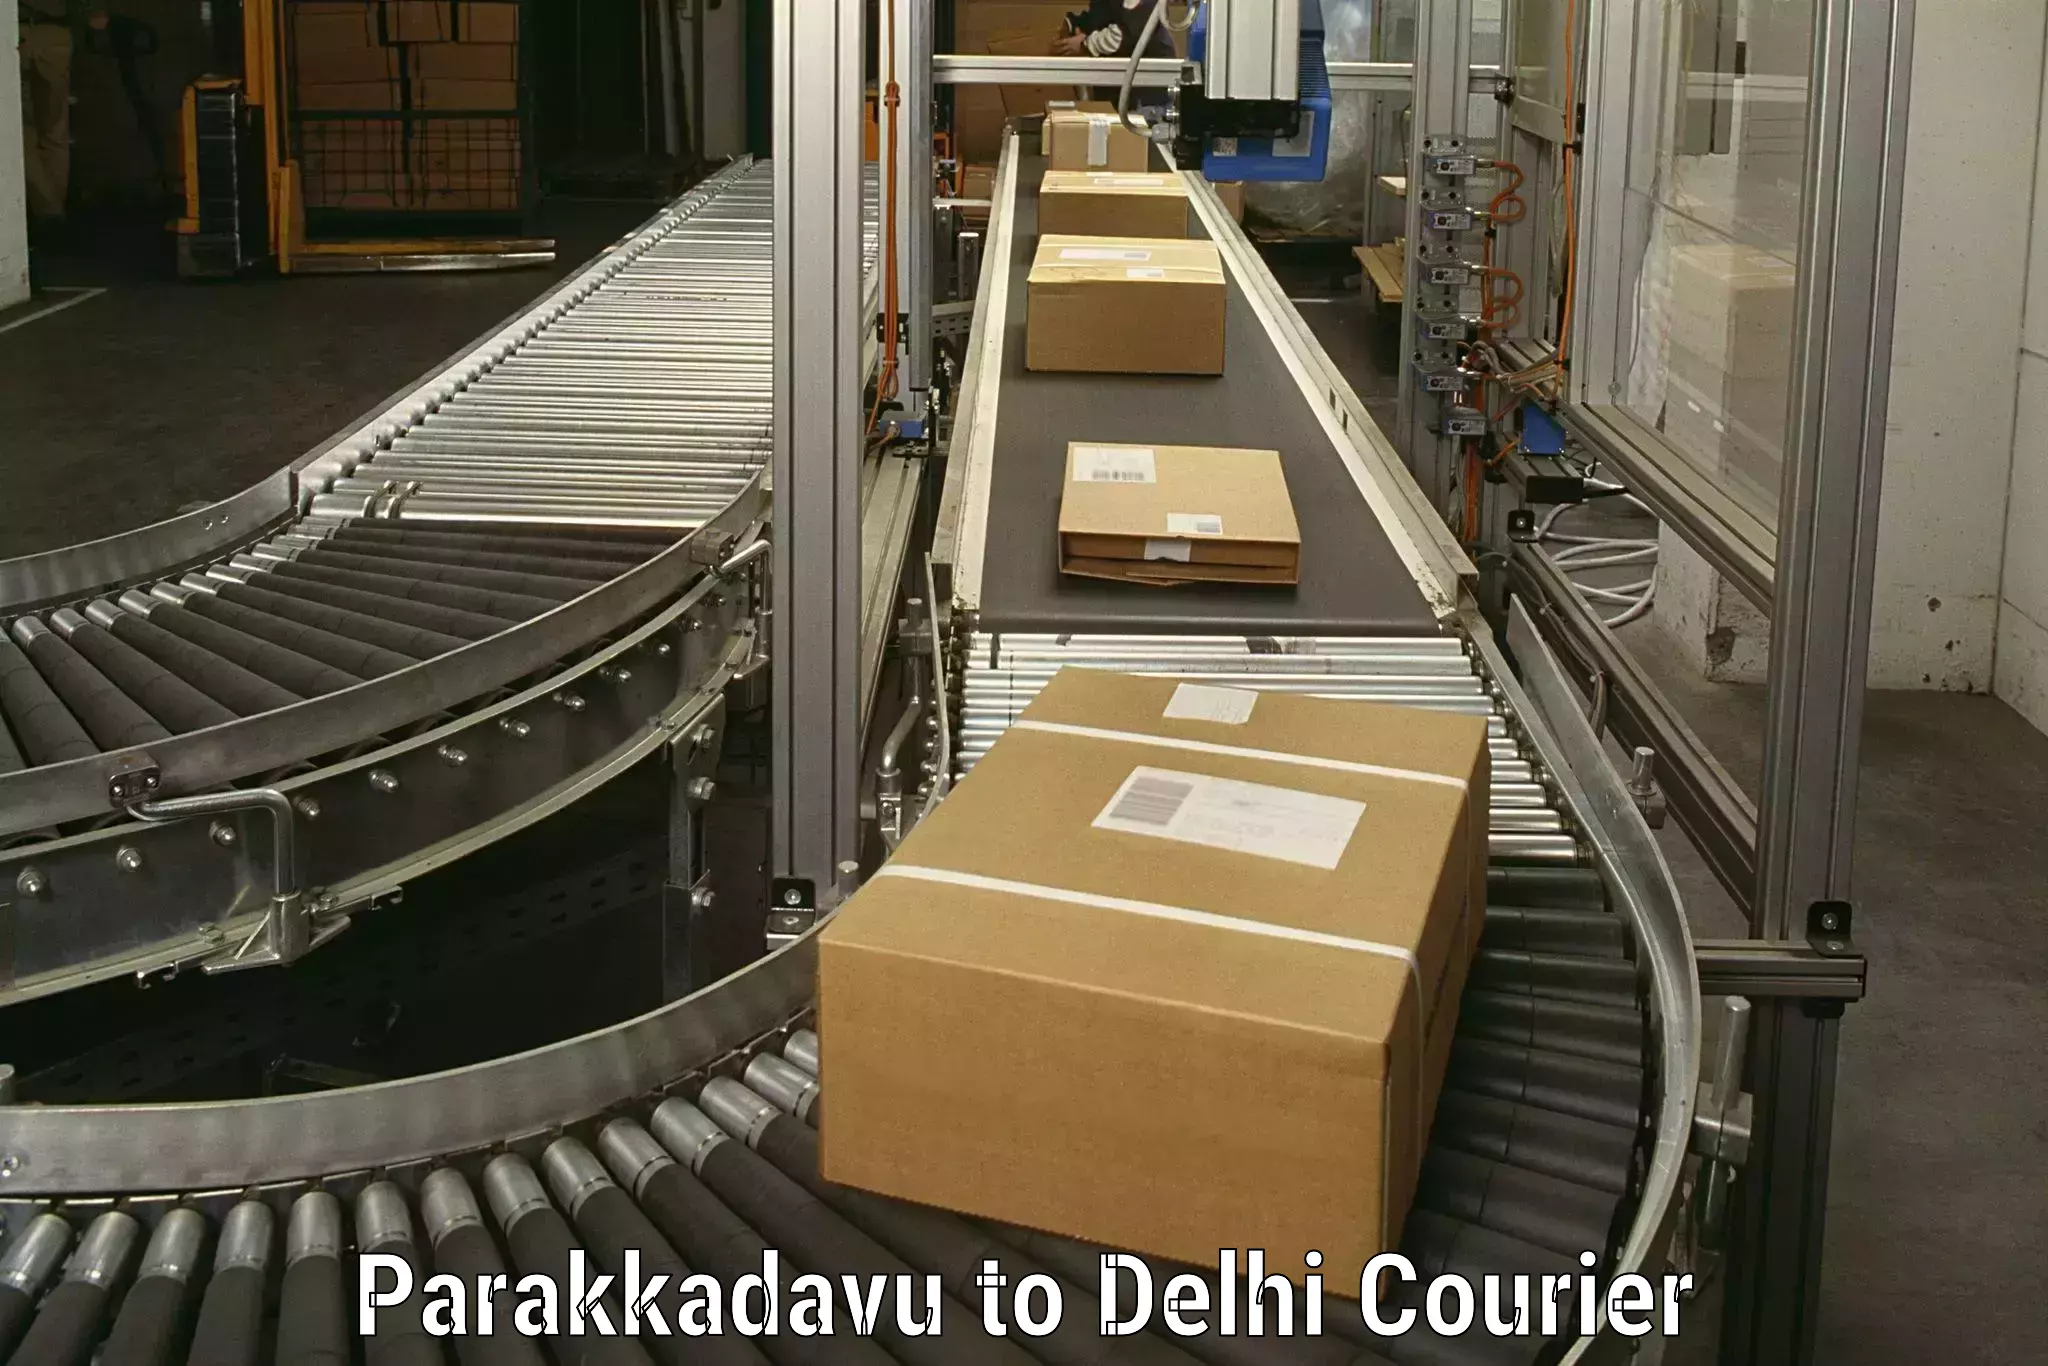 Professional moving company Parakkadavu to NCR